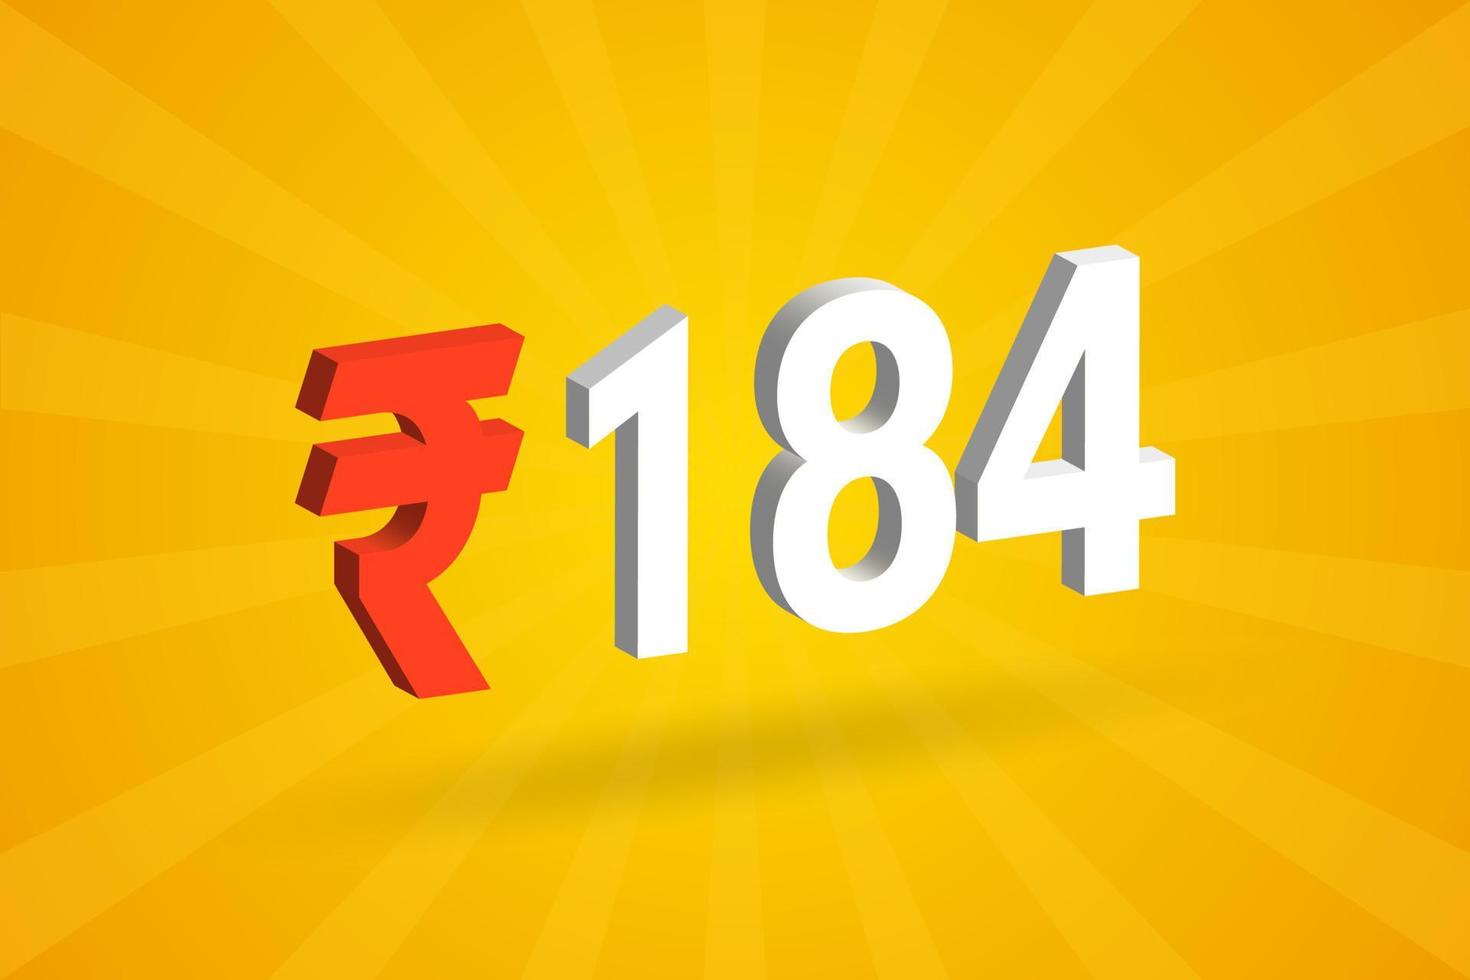 184 rupias símbolo 3d imagen vectorial de texto en negrita. 3d 184 rupia india signo de moneda ilustración vectorial vector